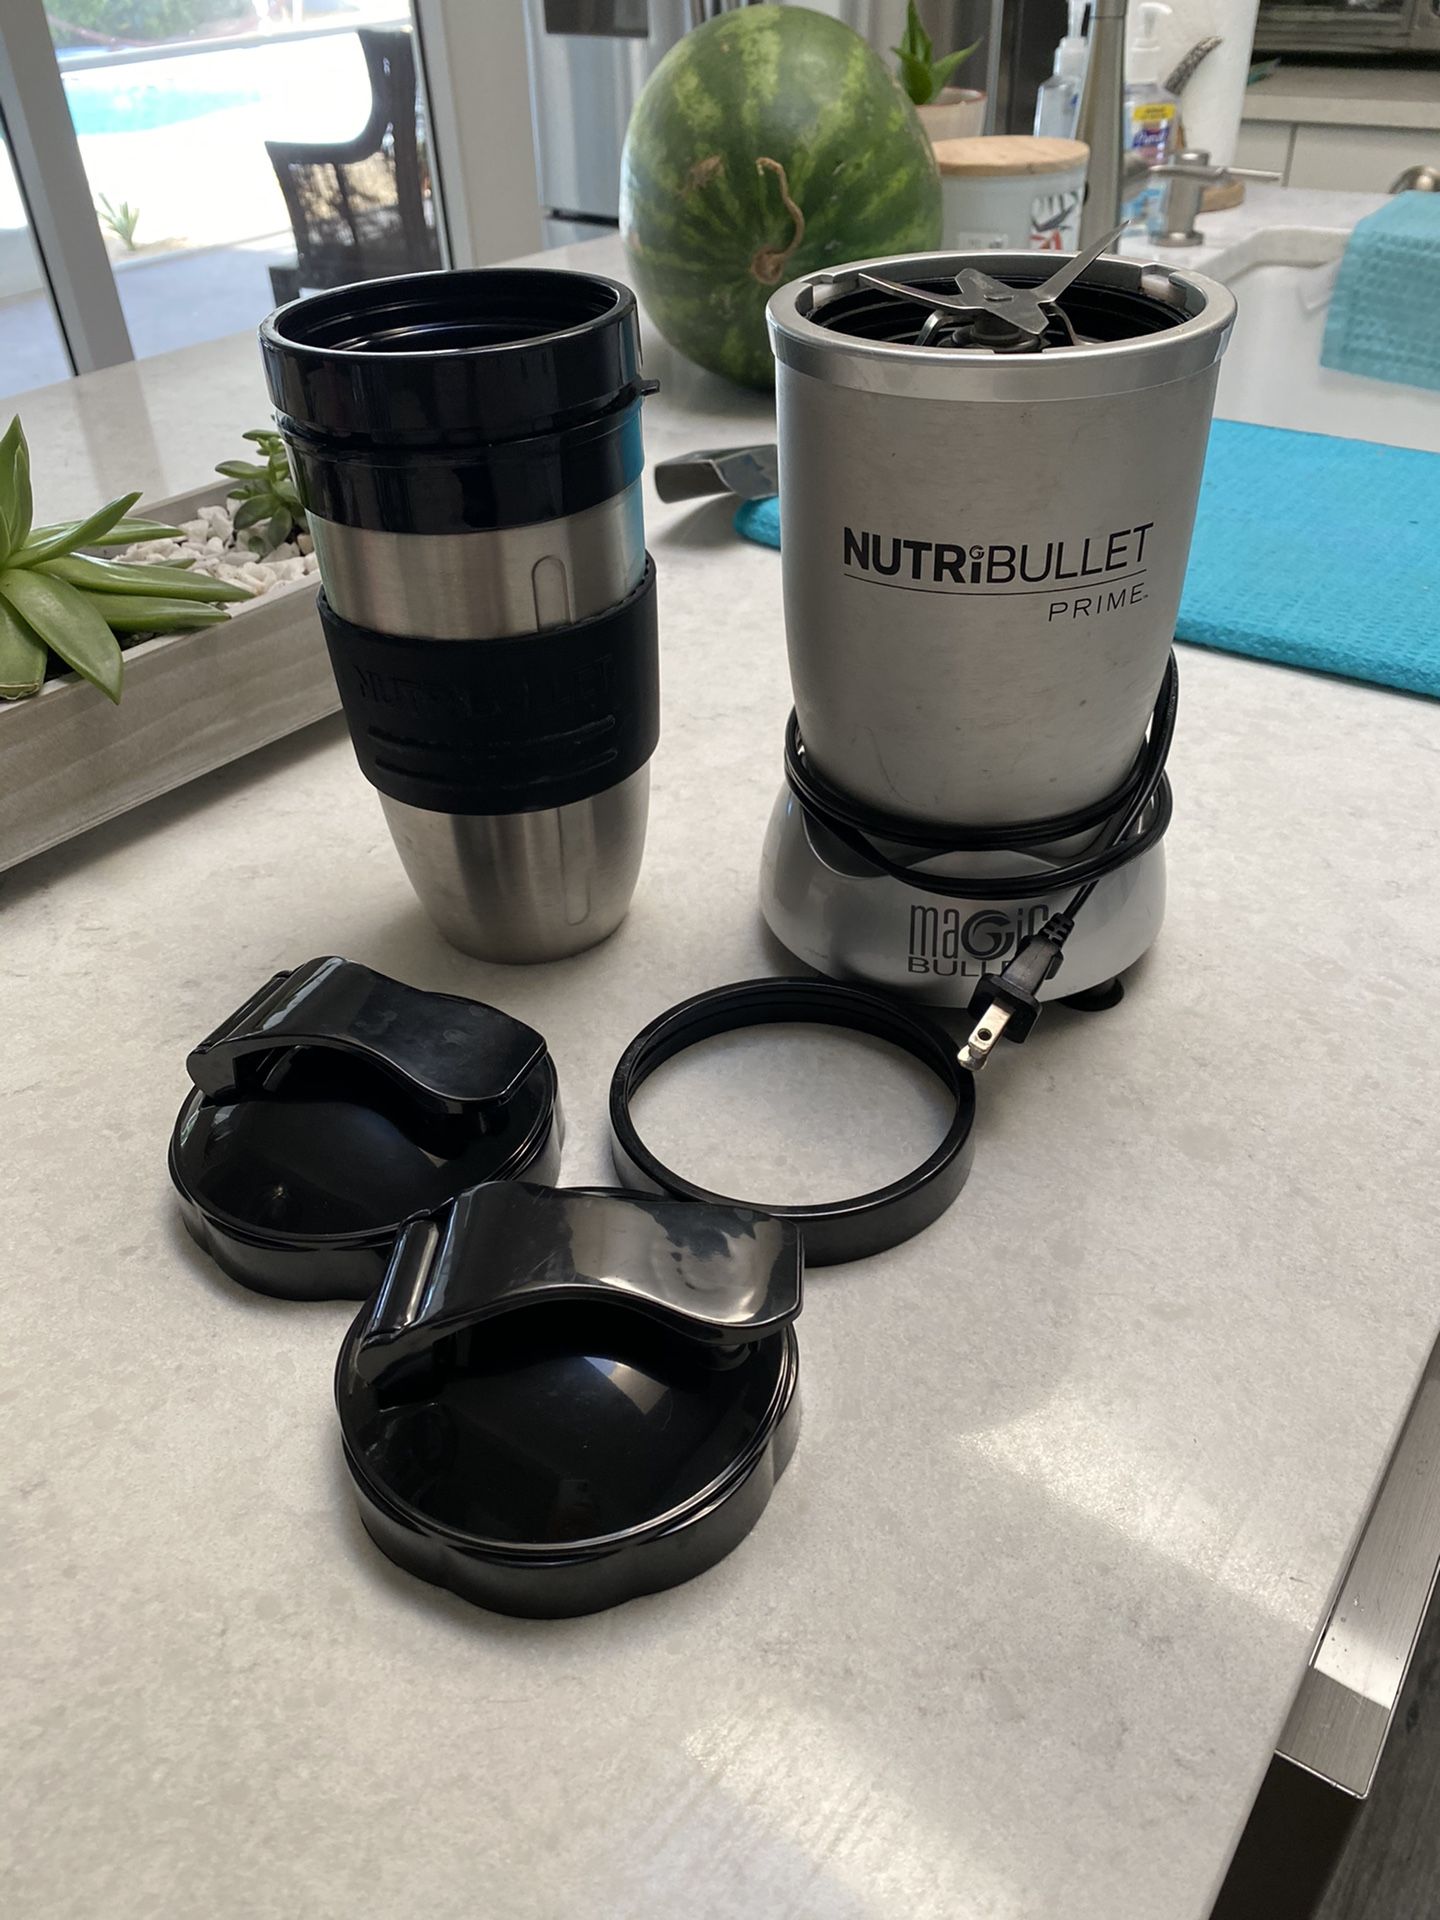 Nutribullet price w/ accessories